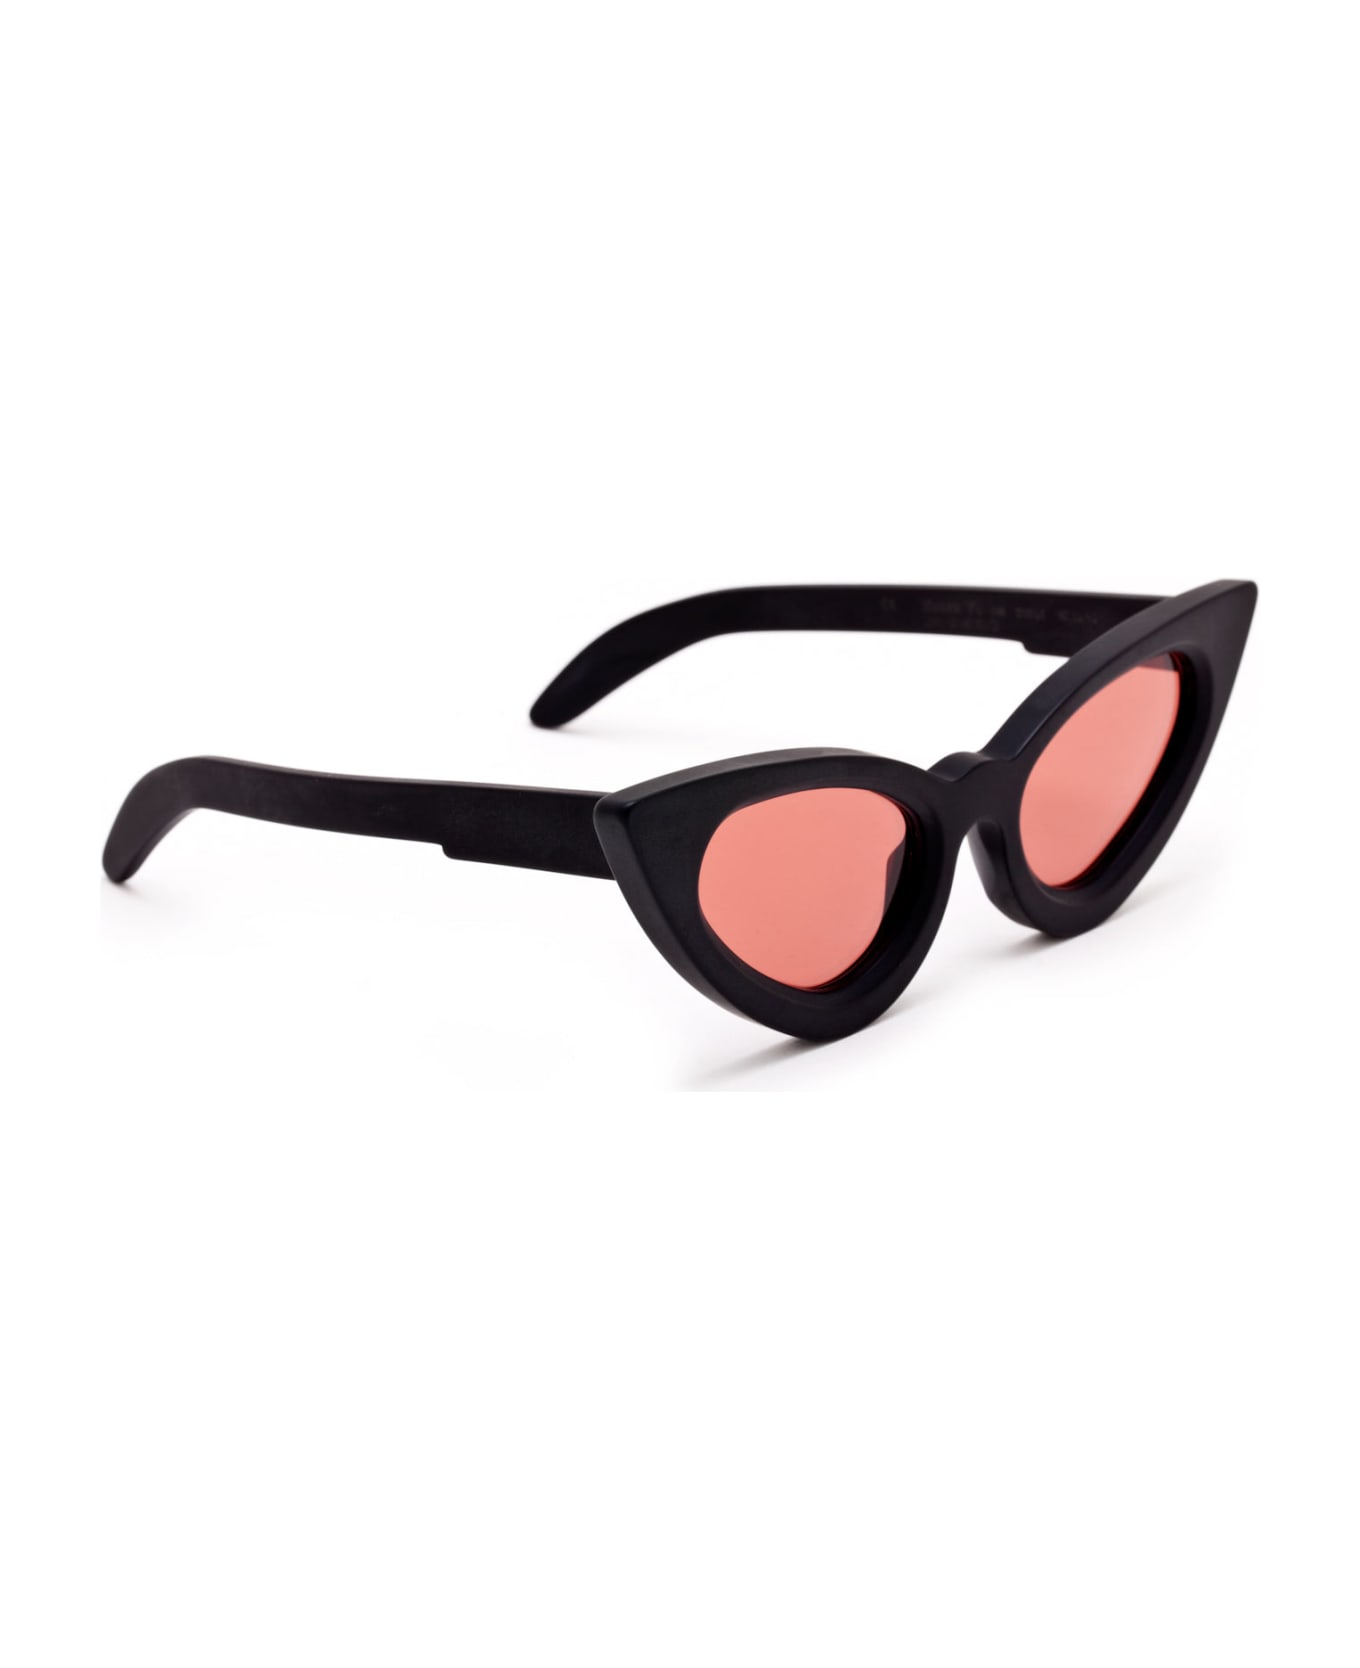 Kuboraum Mask Y3 - Black Matte Sunglasses - Matte black